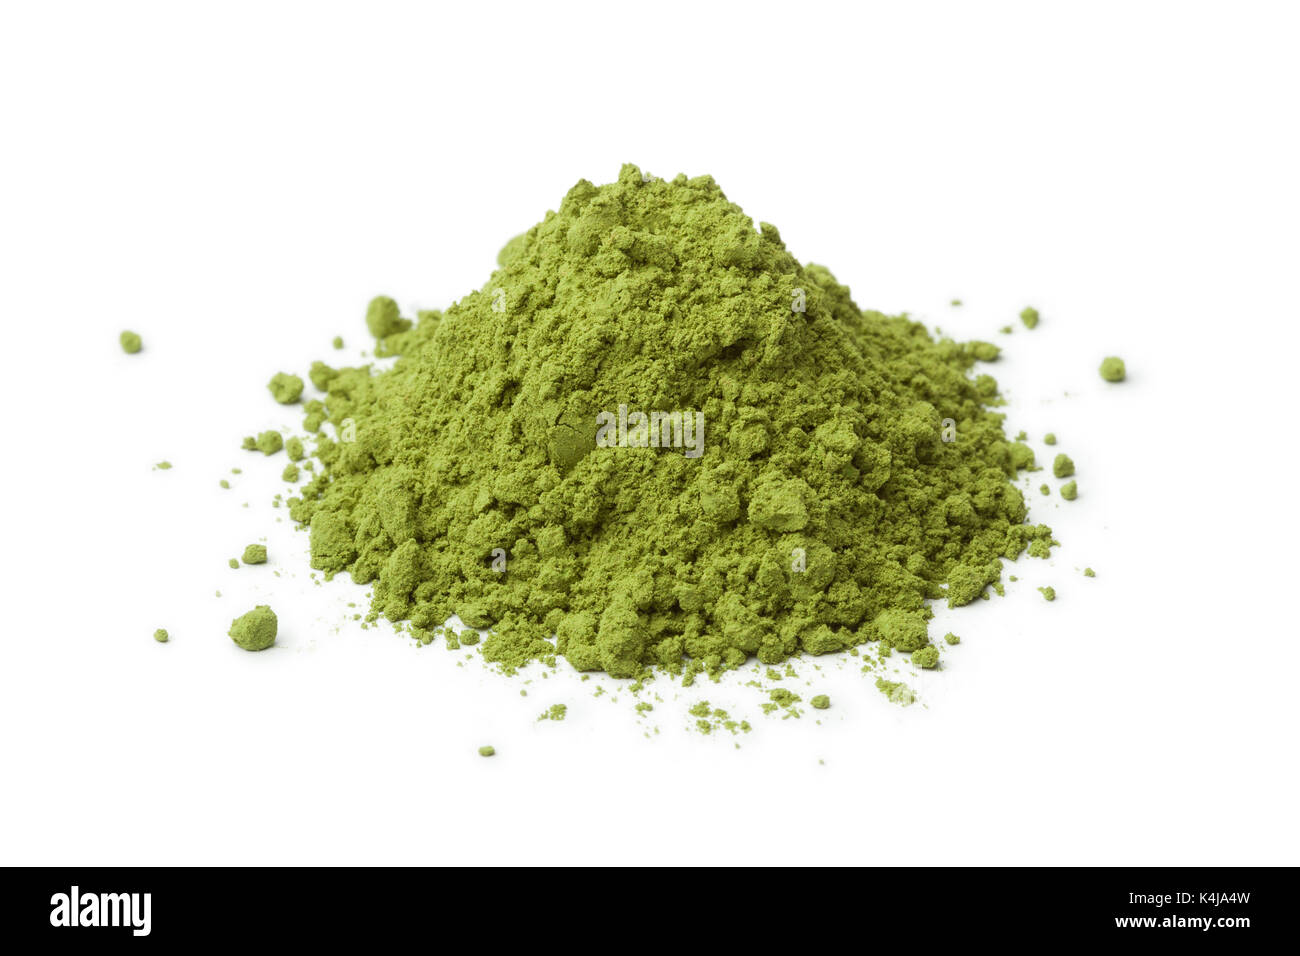 Heap of Japanese powdered green matcha tea on white background Stock Photo